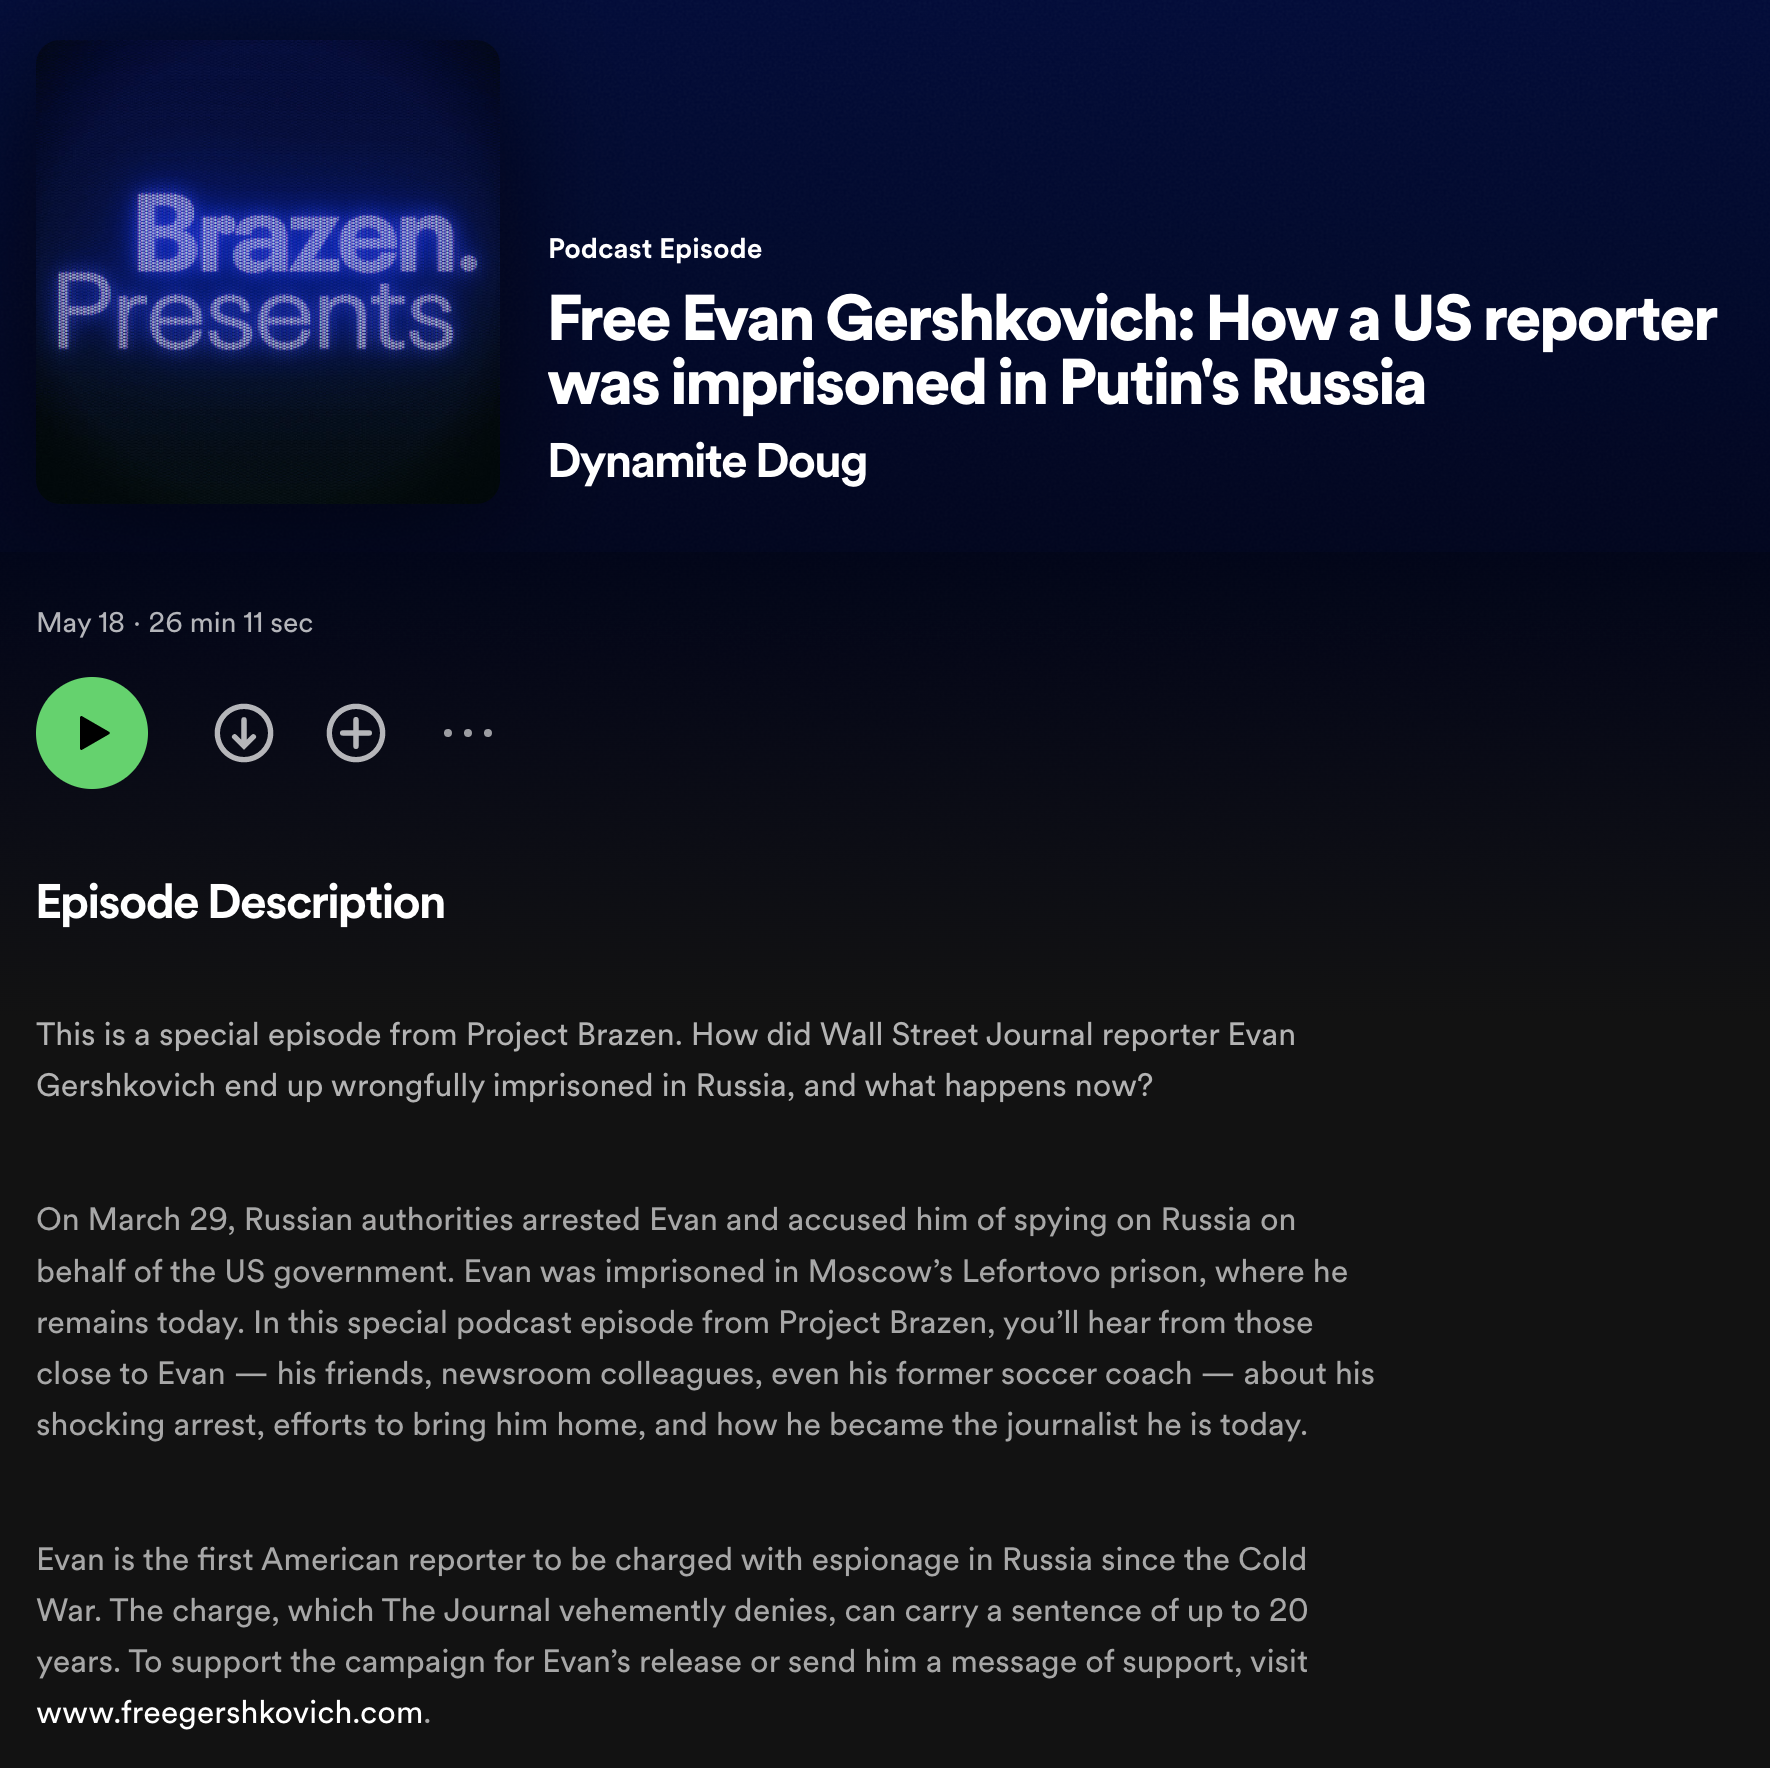 Free Evan Gershkovich: How a US reporter was imprisoned in Putin’s Russia – Project Brazen (image)